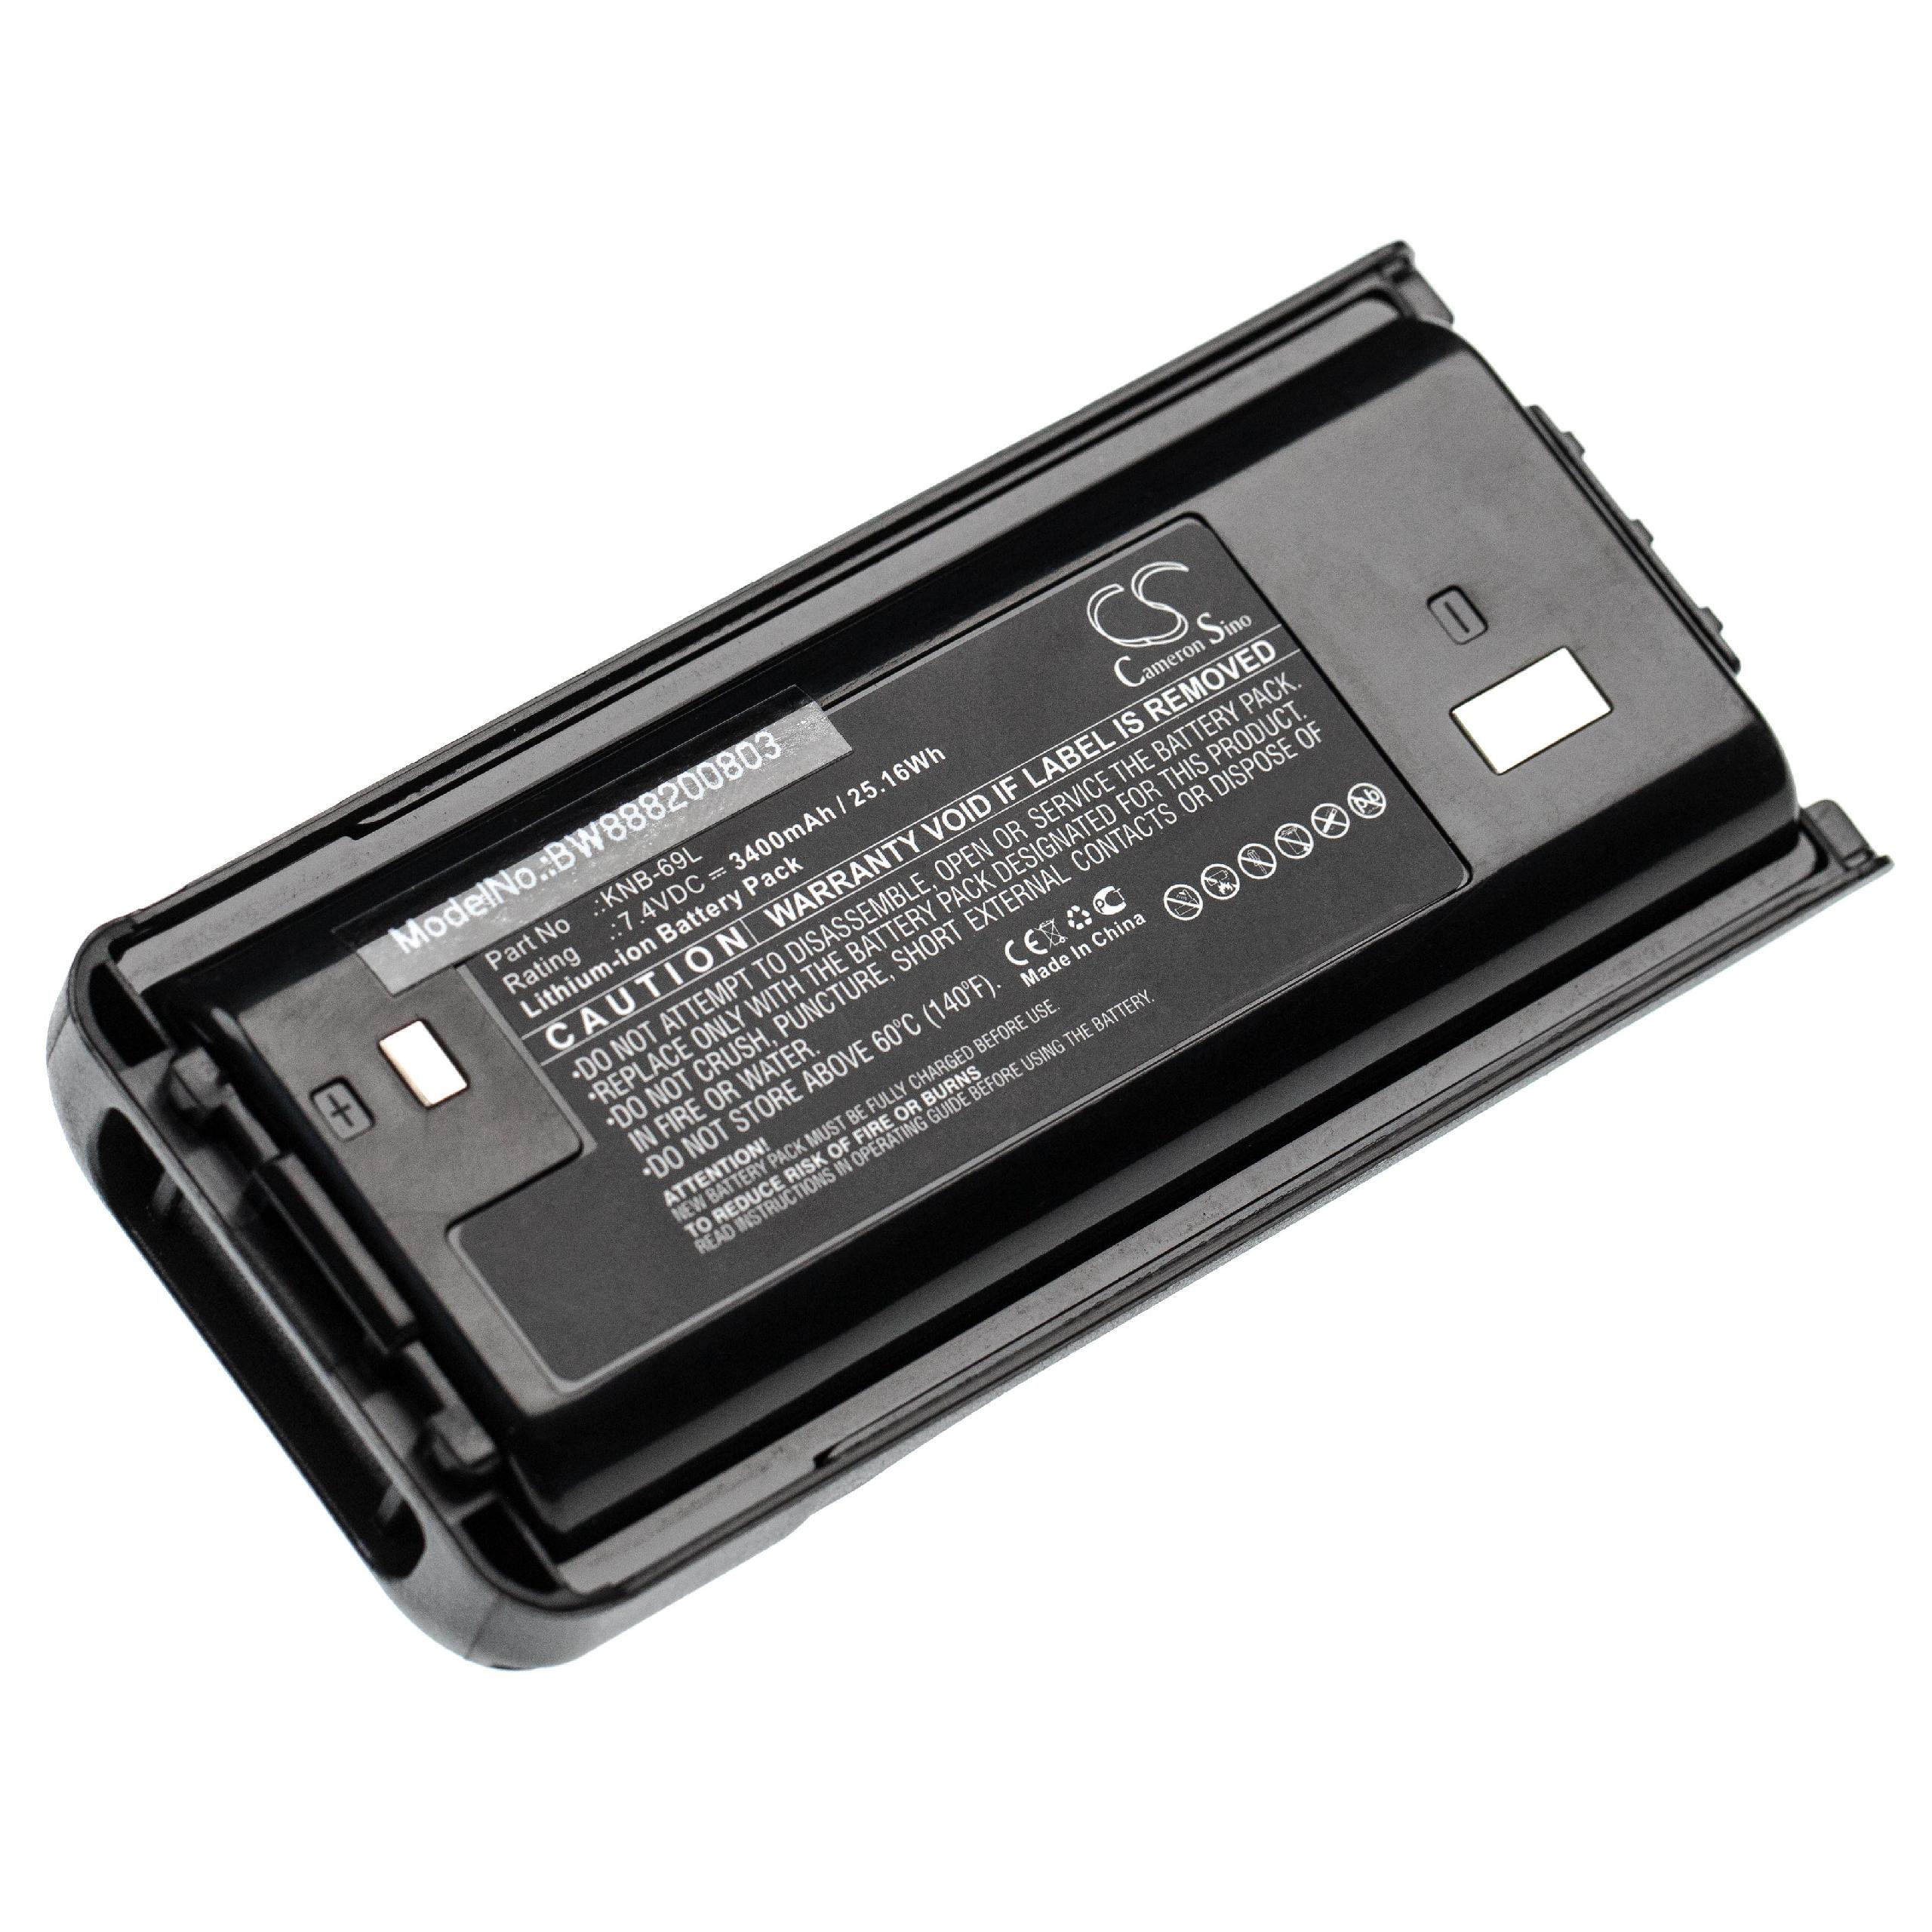 Batterie remplace Kenwood KNB-69L pour radio talkie-walkie - 3400mAh 7,4V Li-ion